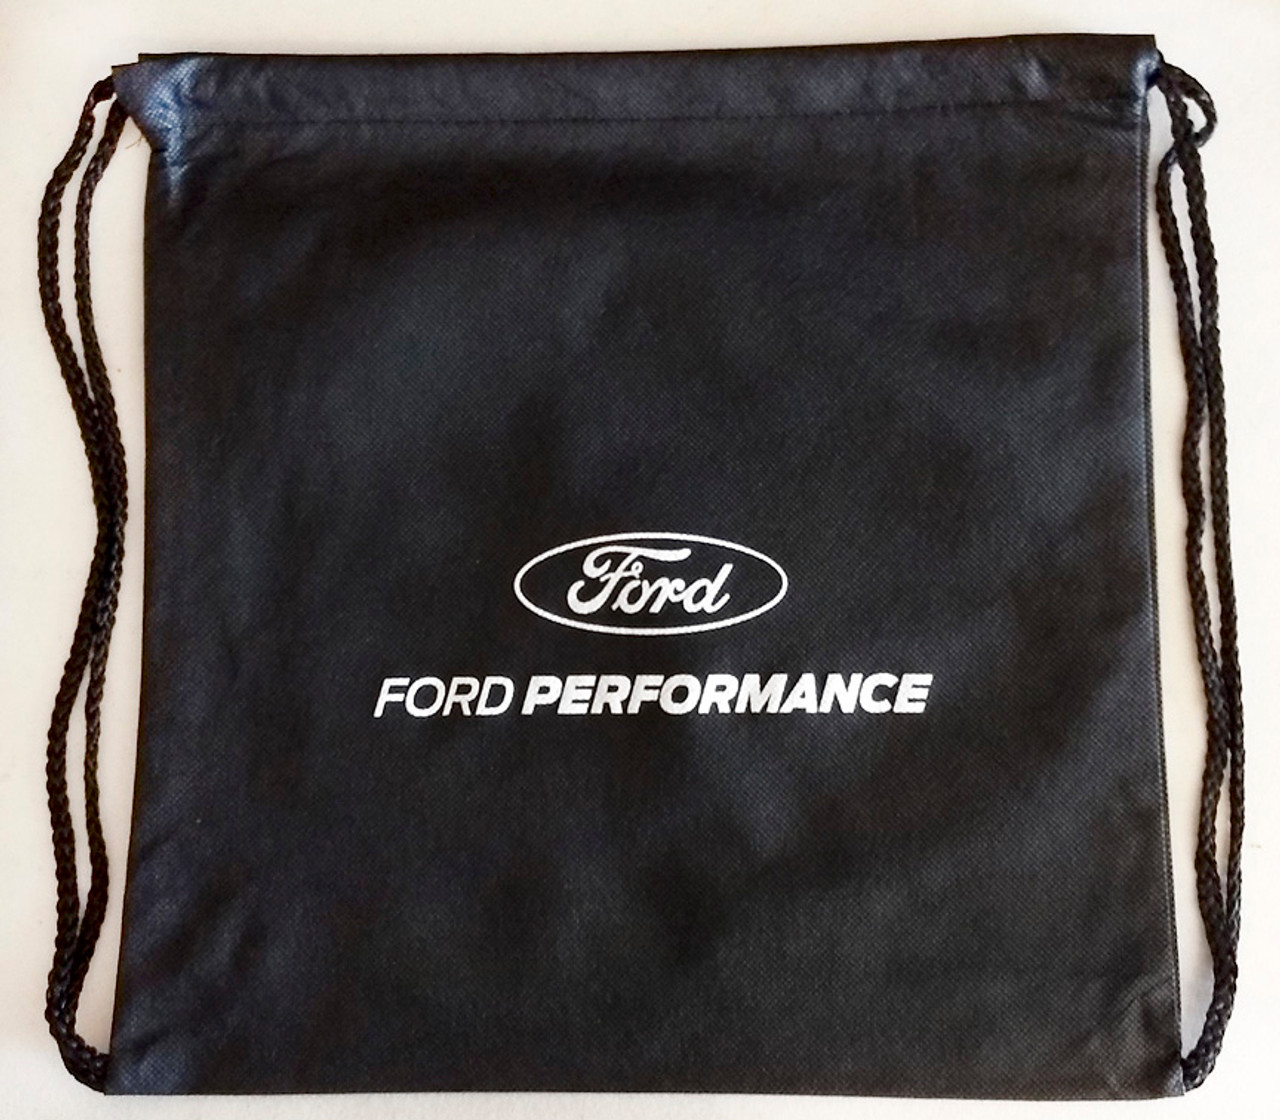 Ford Performance Drawstring Bag